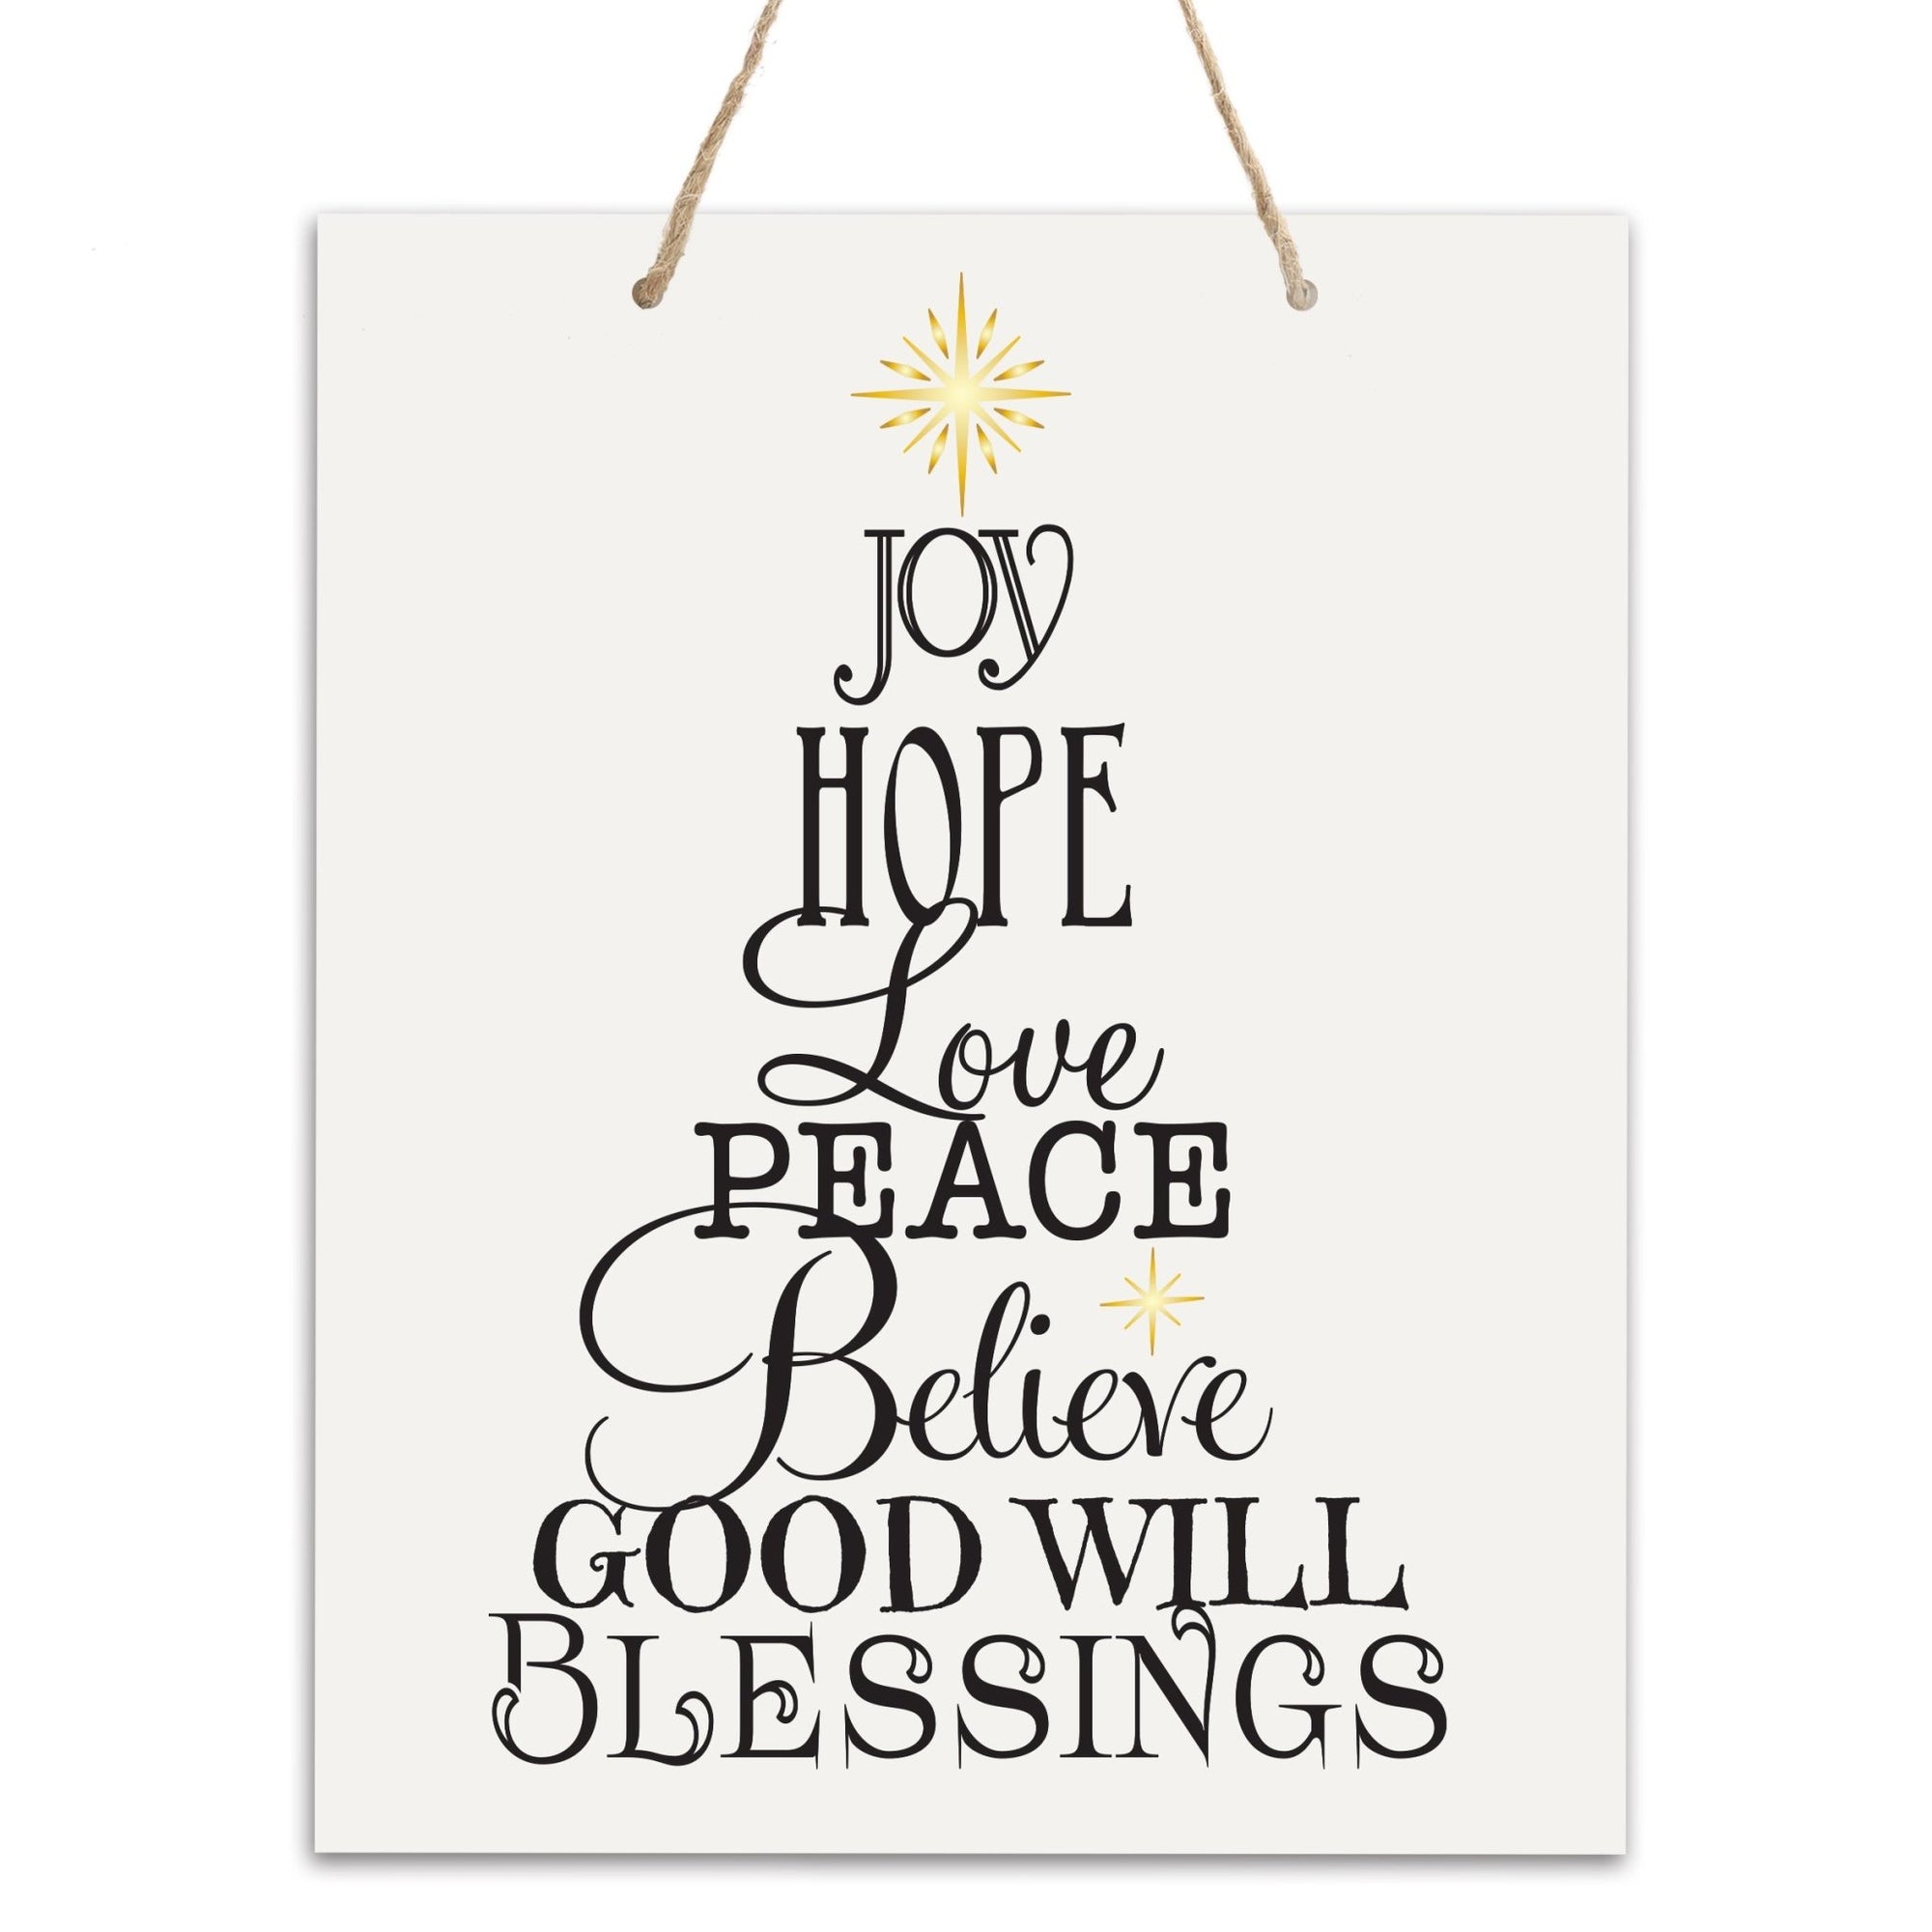 Merry Christmas Wall Hanging Sign - Joy Hope Love - LifeSong Milestones